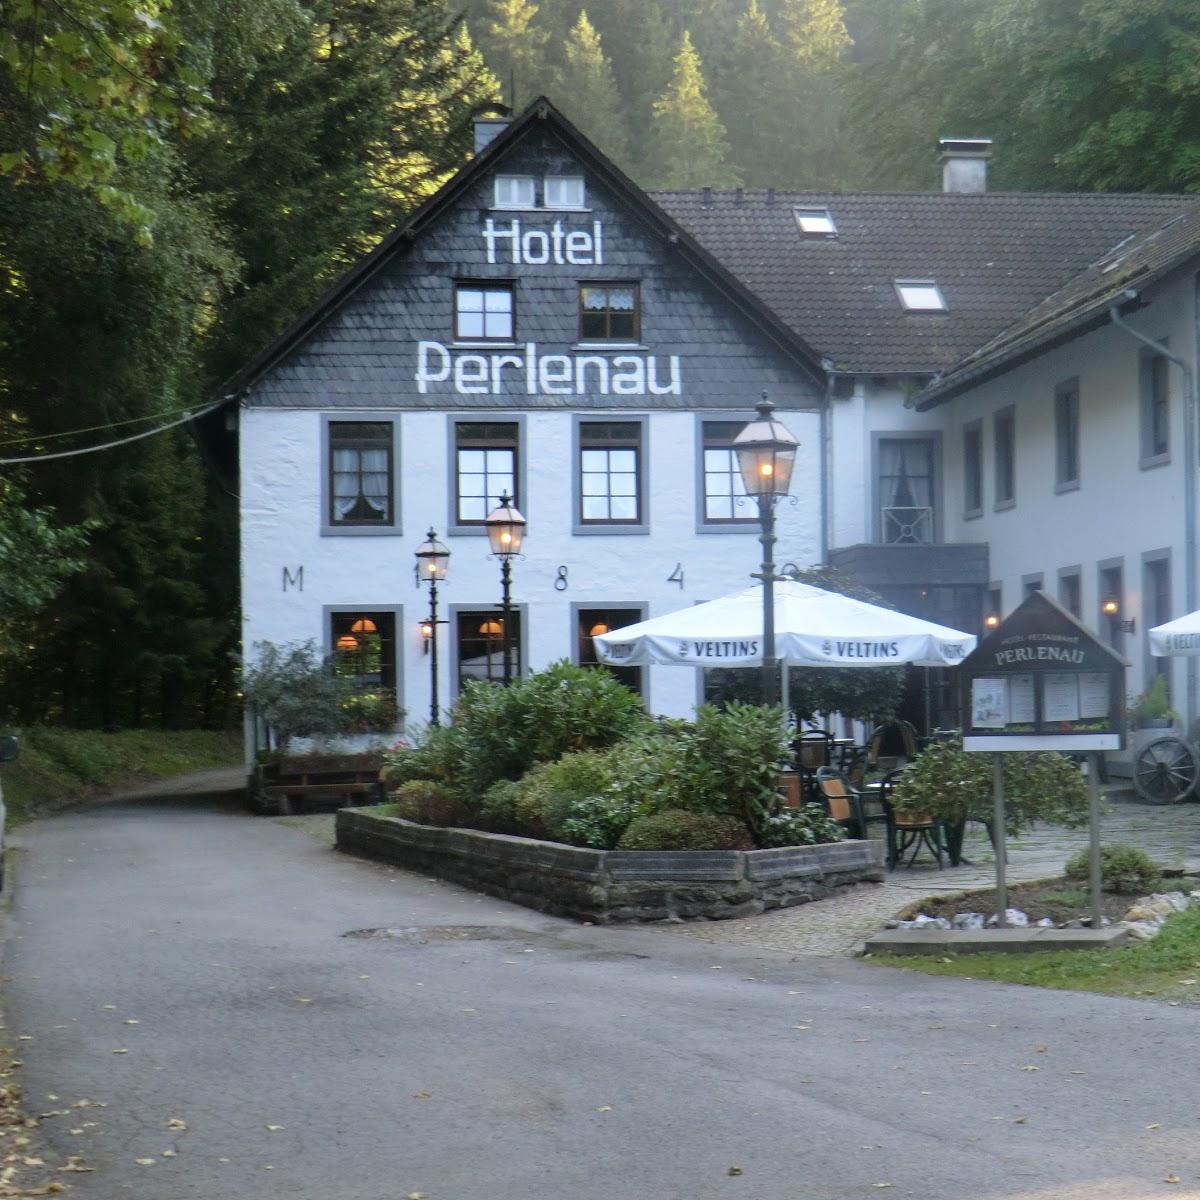 Restaurant "Hotel-Restaurant Perlenau" in Monschau